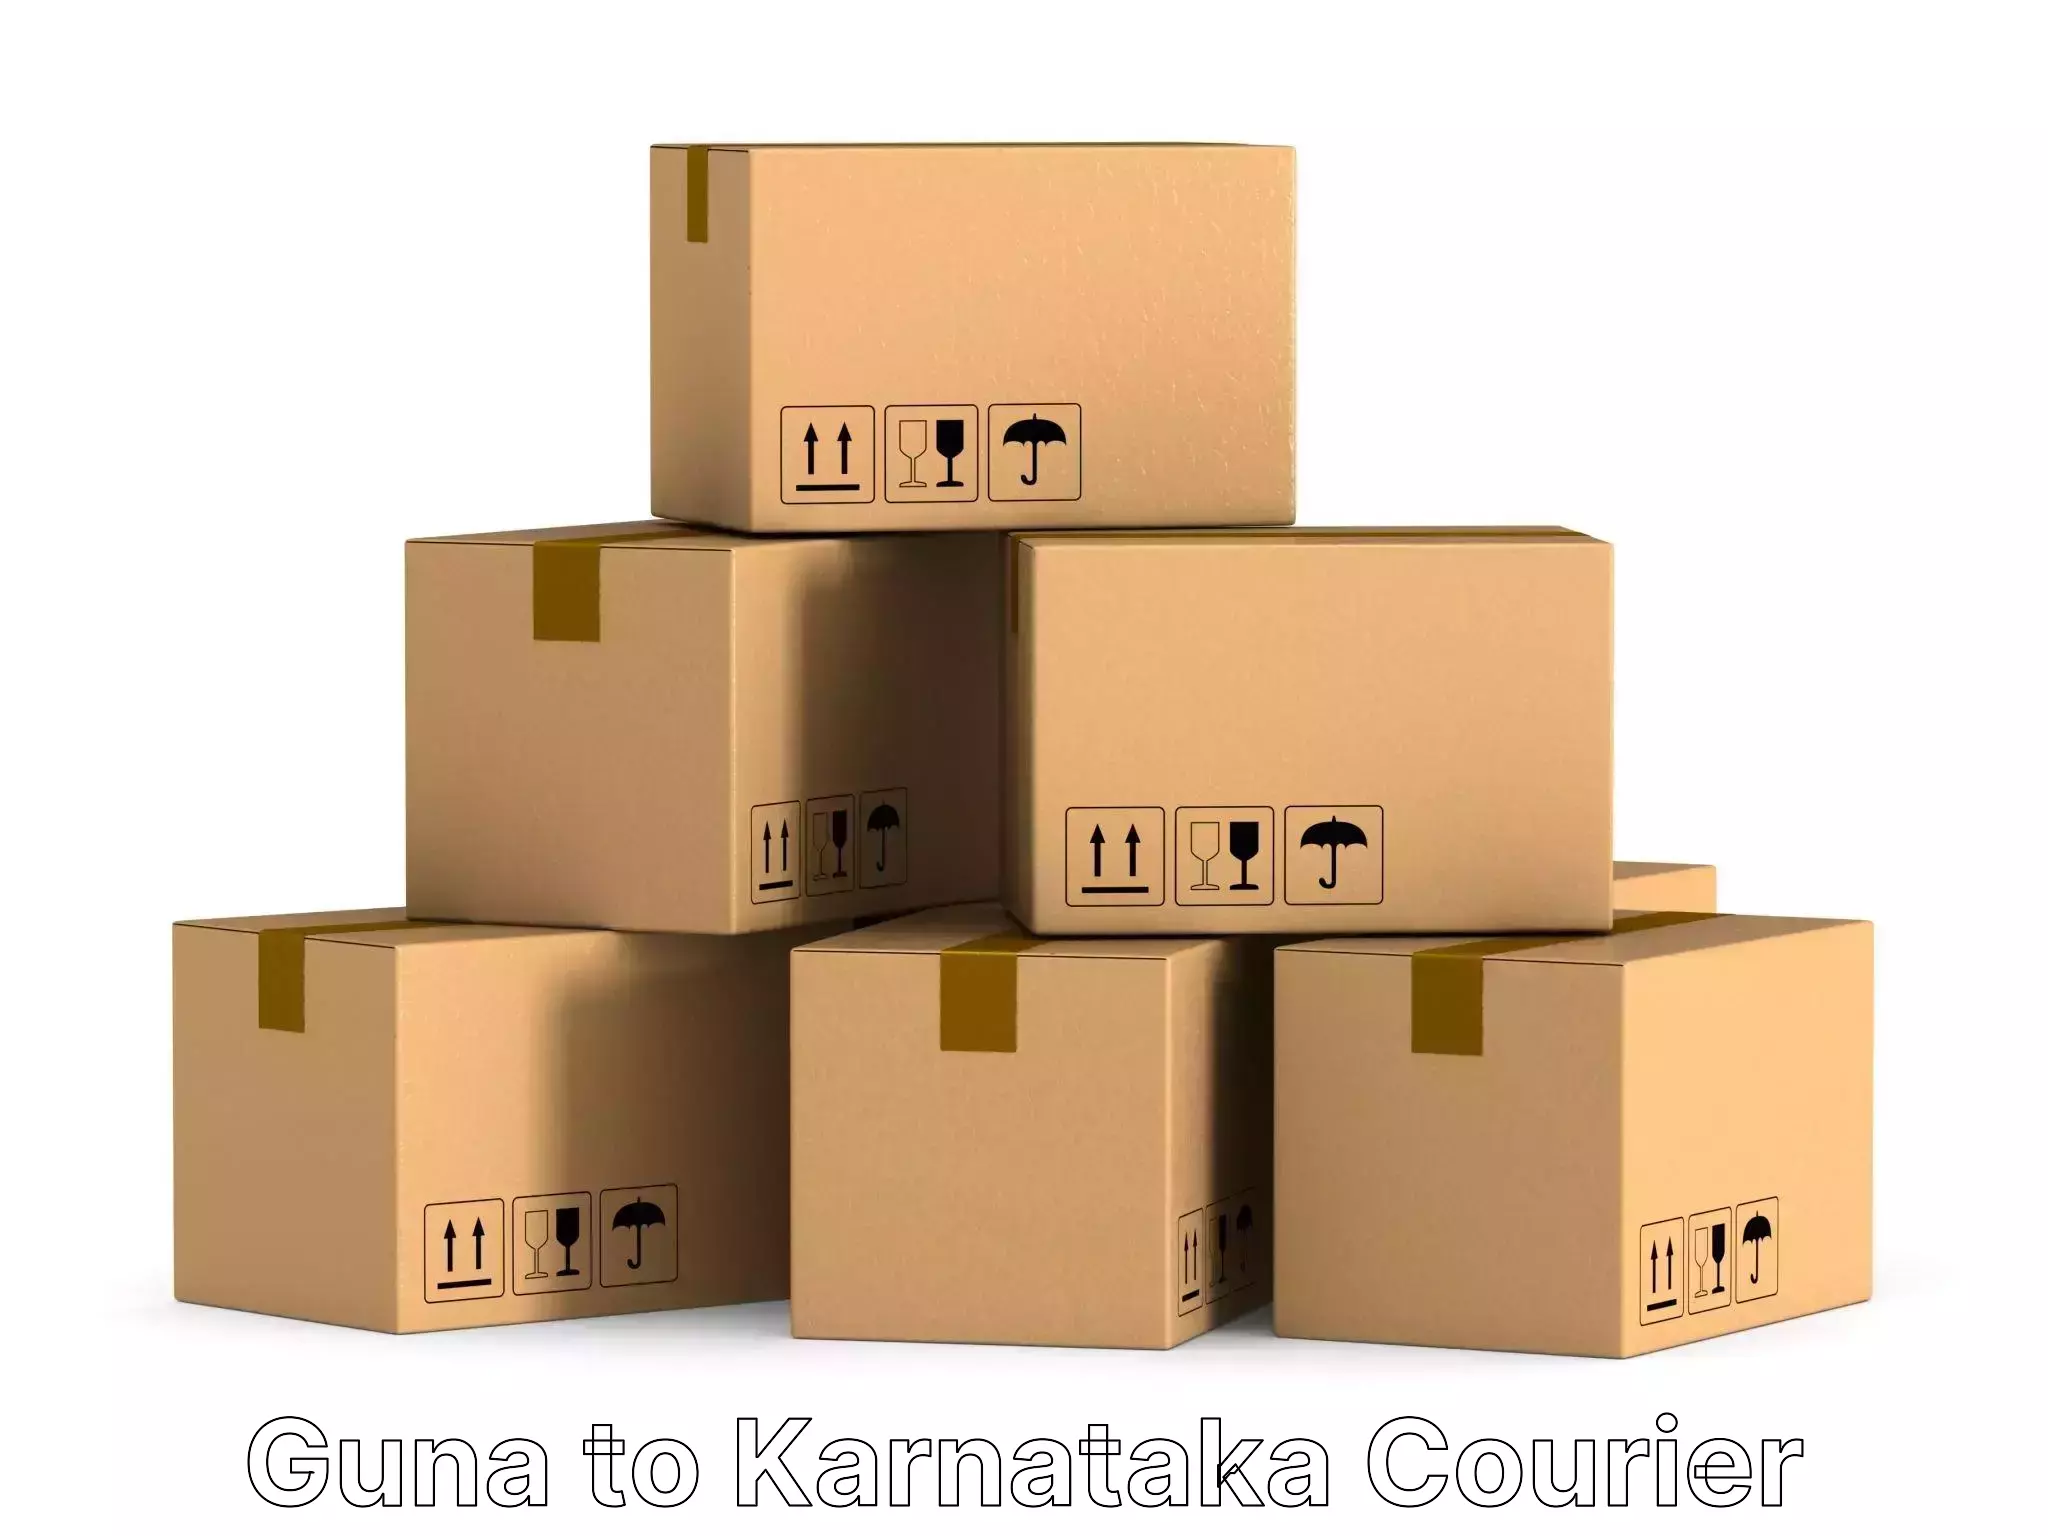 Customized relocation services in Guna to Karnataka